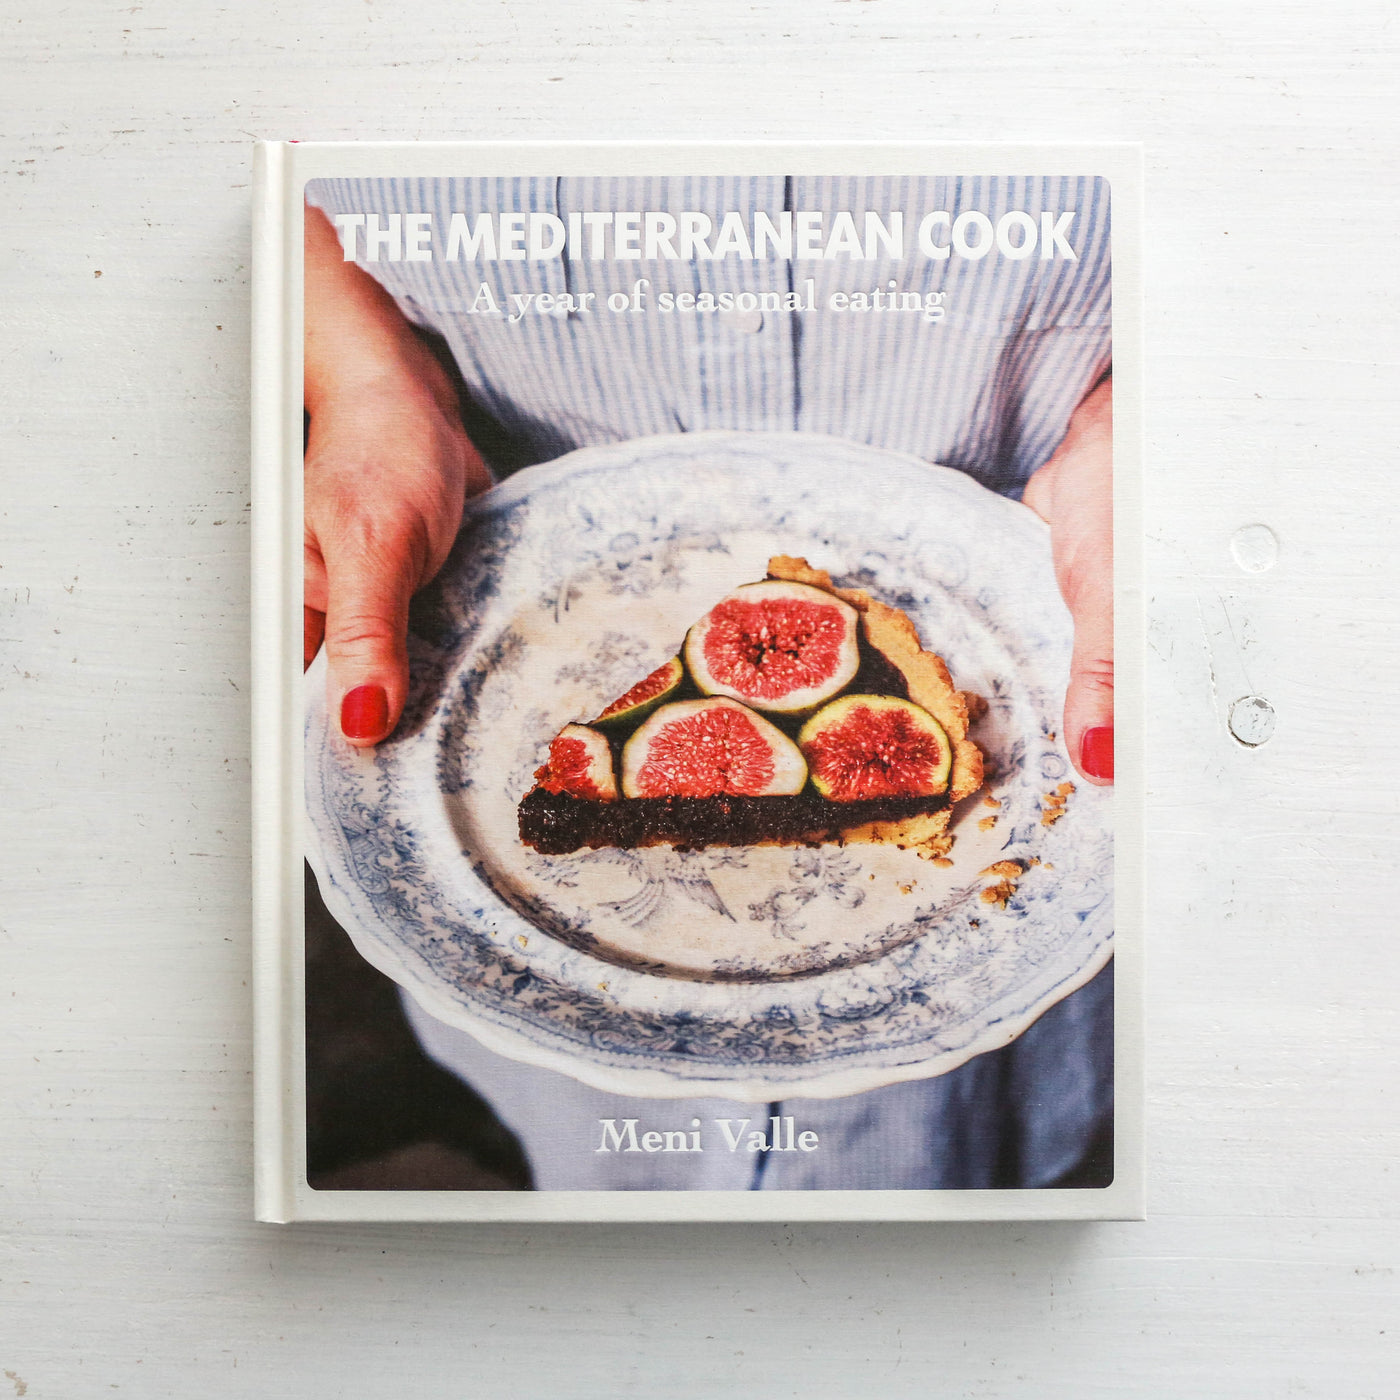 The Mediterranean Cook - A Year of Seasonal Eating